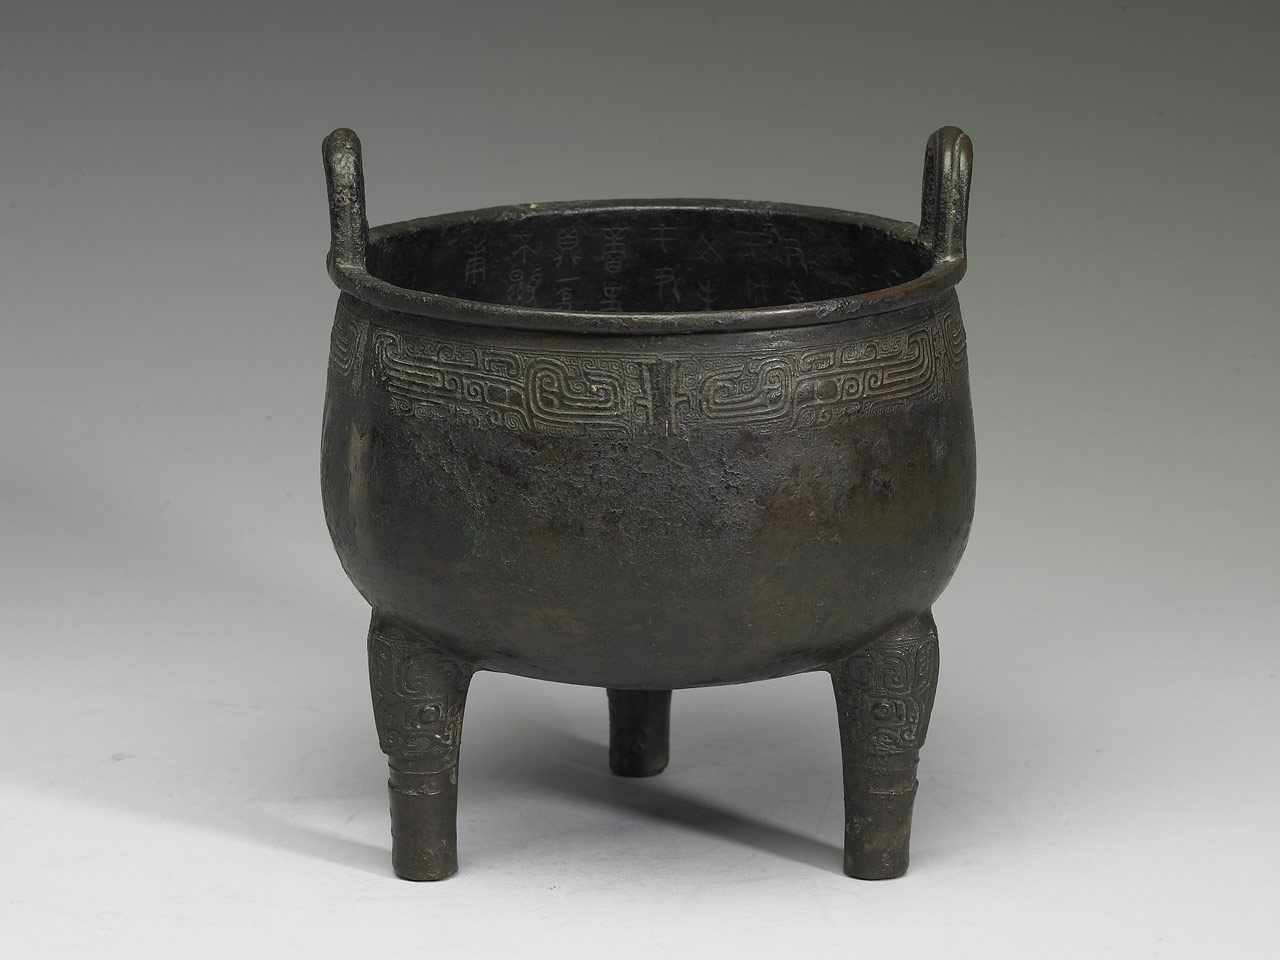 Ding cauldron of Shi-shou, Early Western Zhou Dynasty